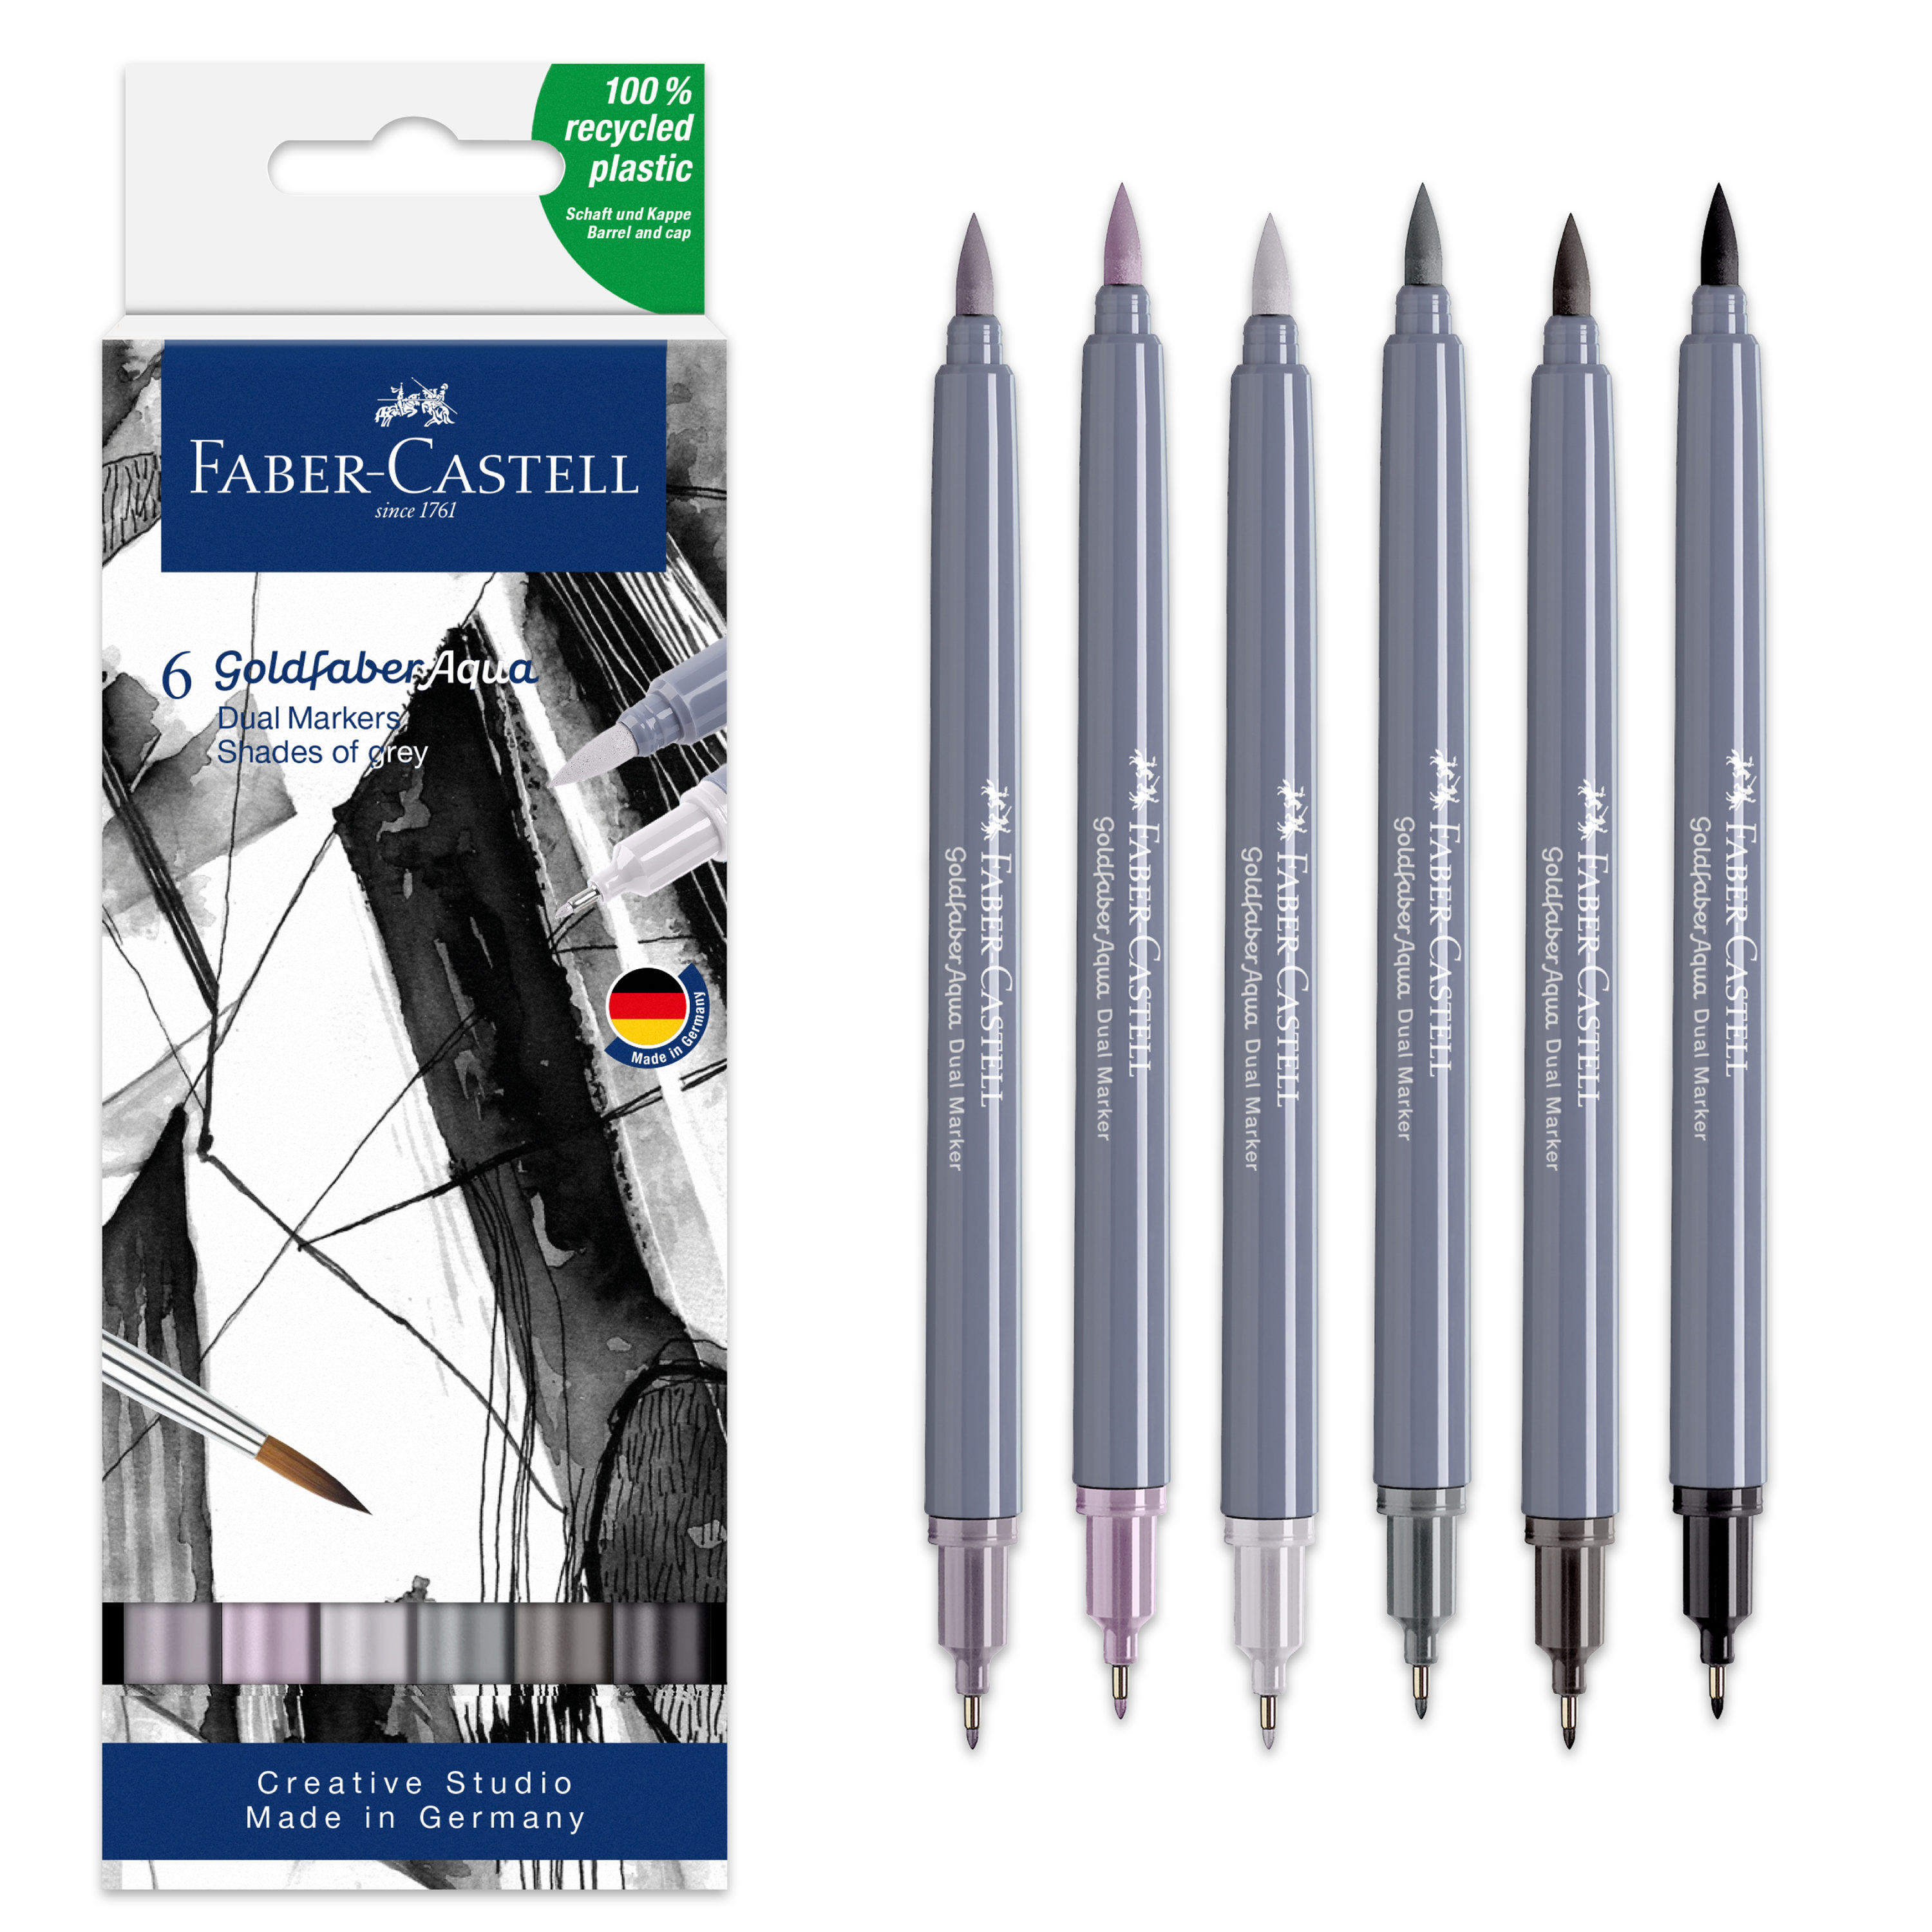 Real Brush Pens Starter Bundle, Fuel Your Creativity